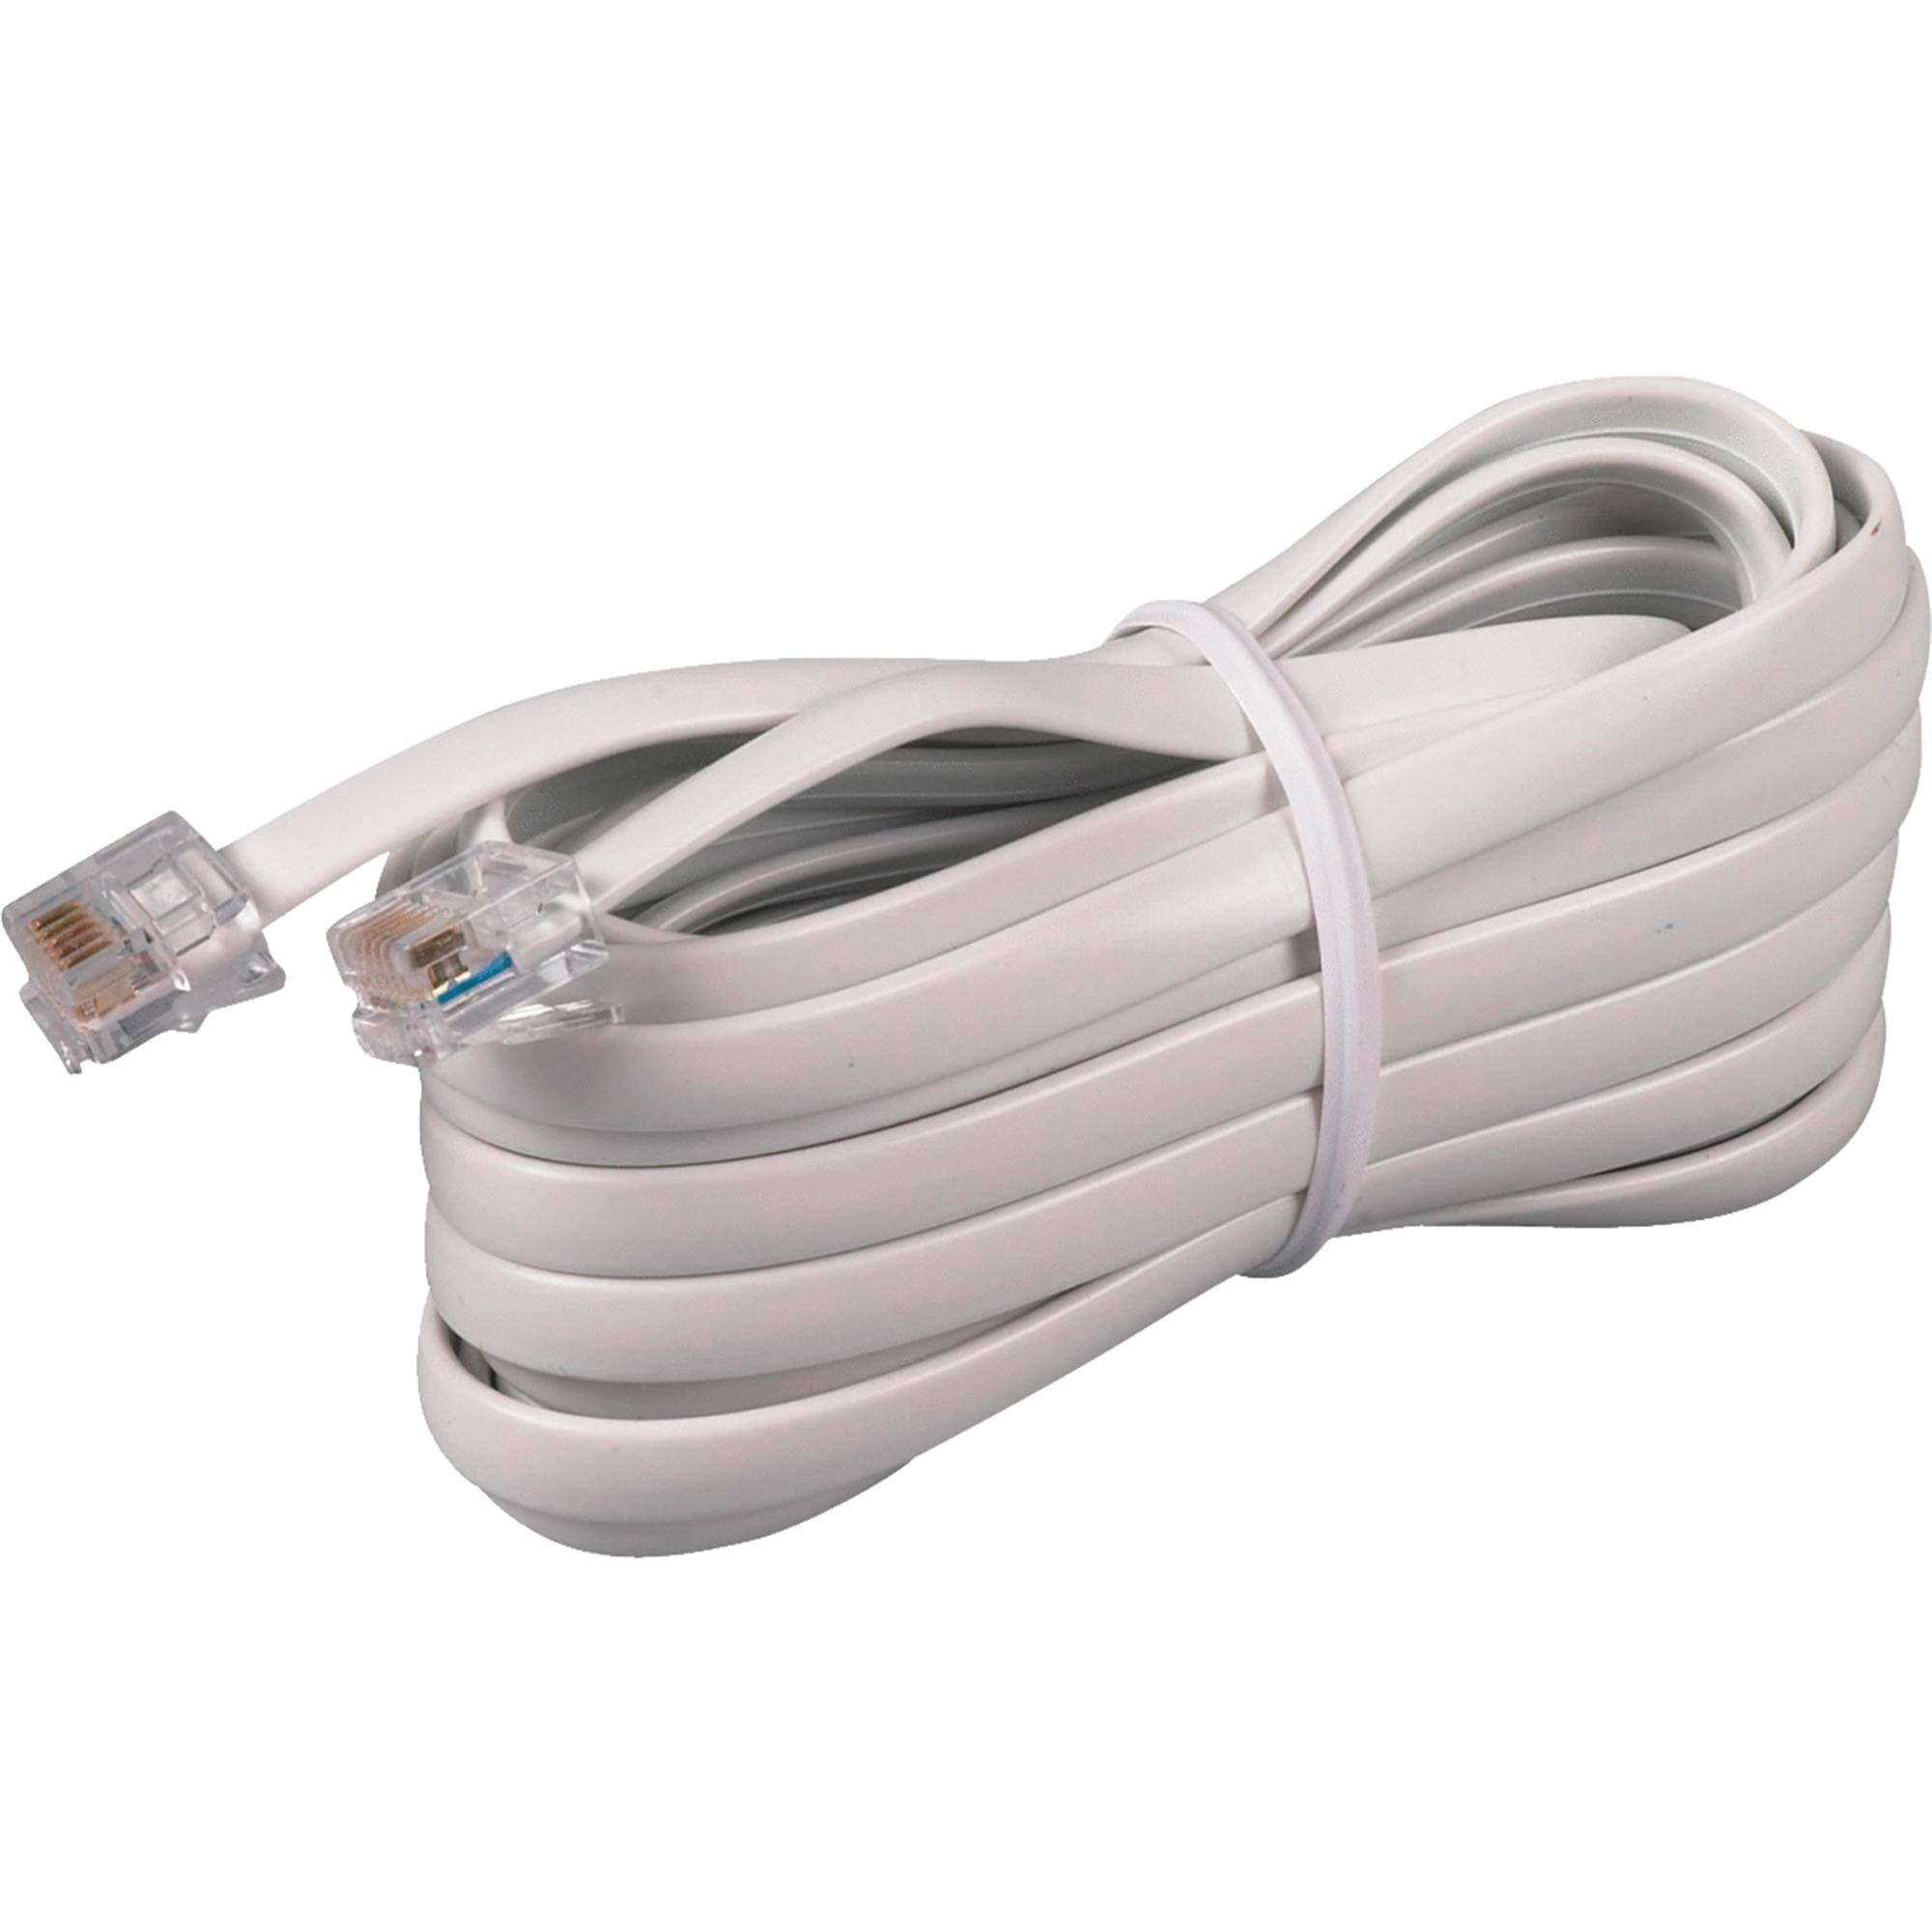 Audiovox Modular Line Cord - White, 15'